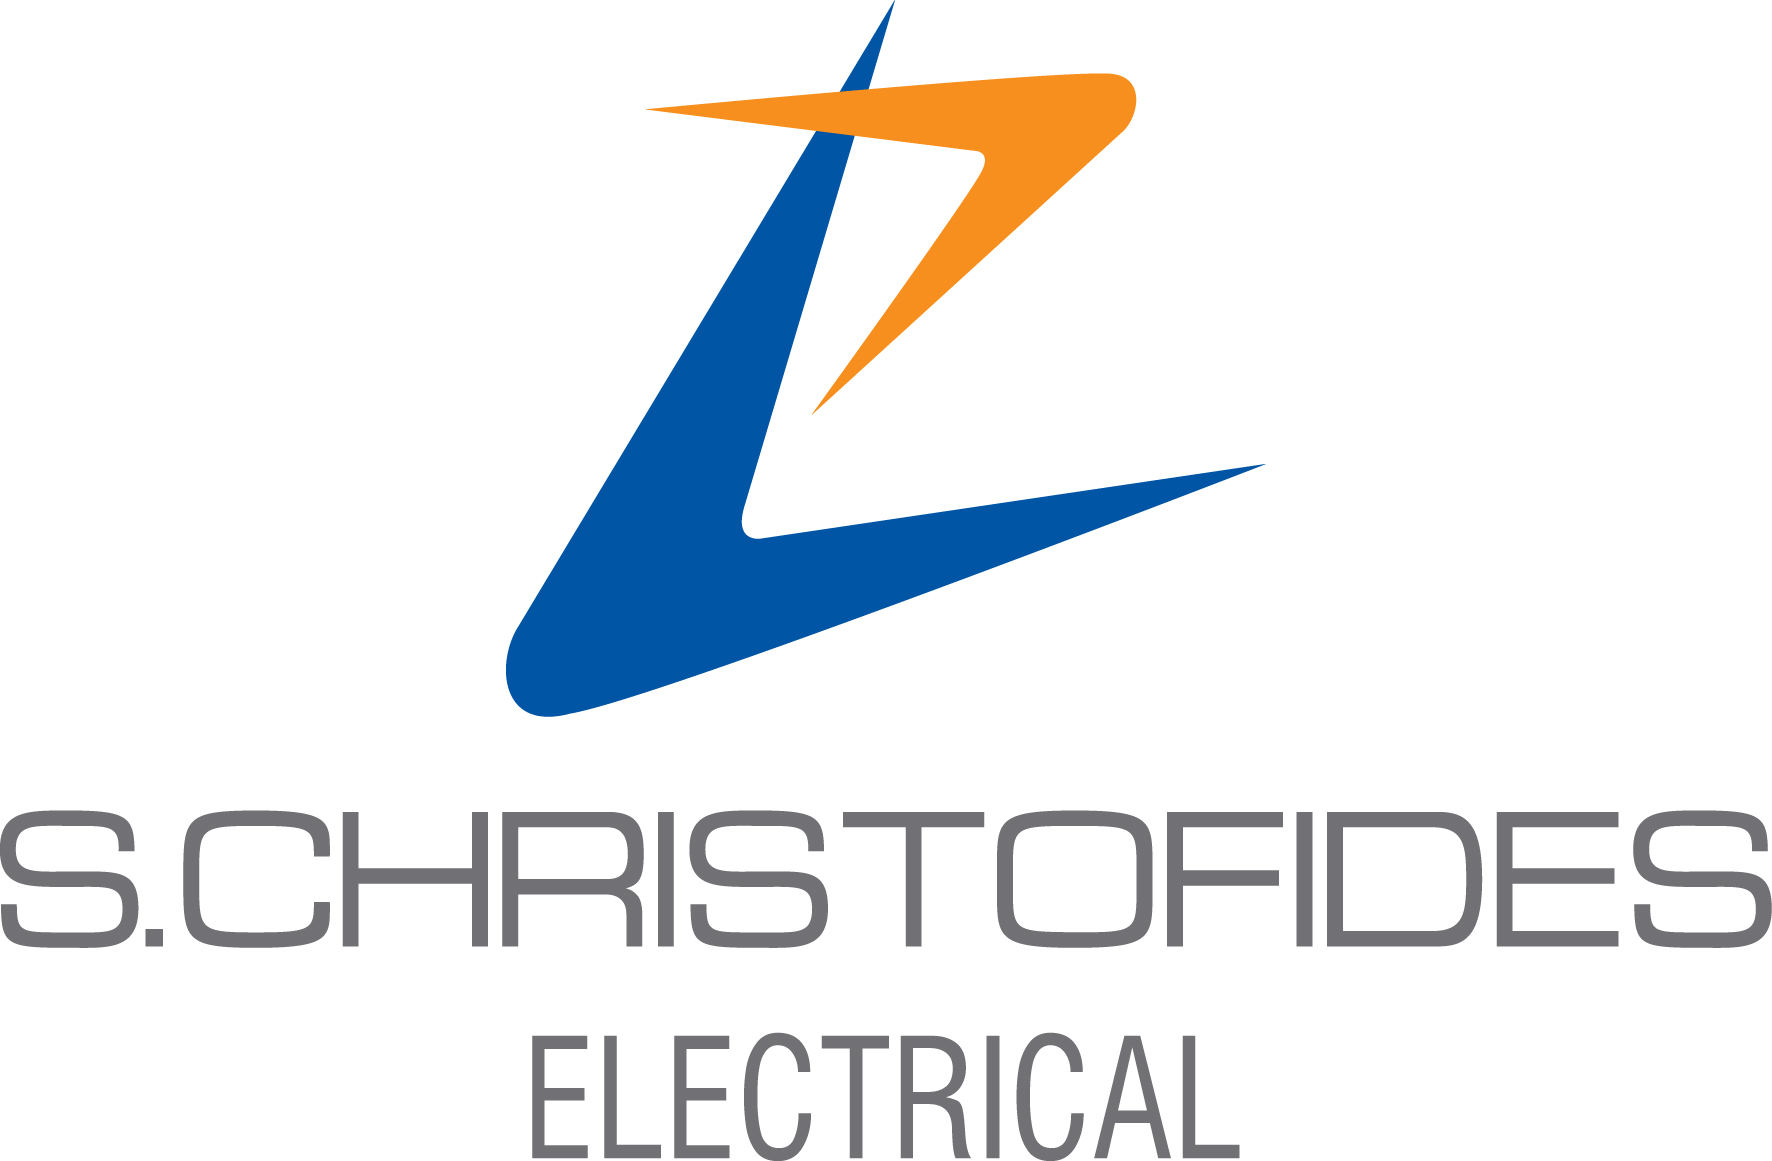 S. CHRISTOFIDES ELECTRICAL